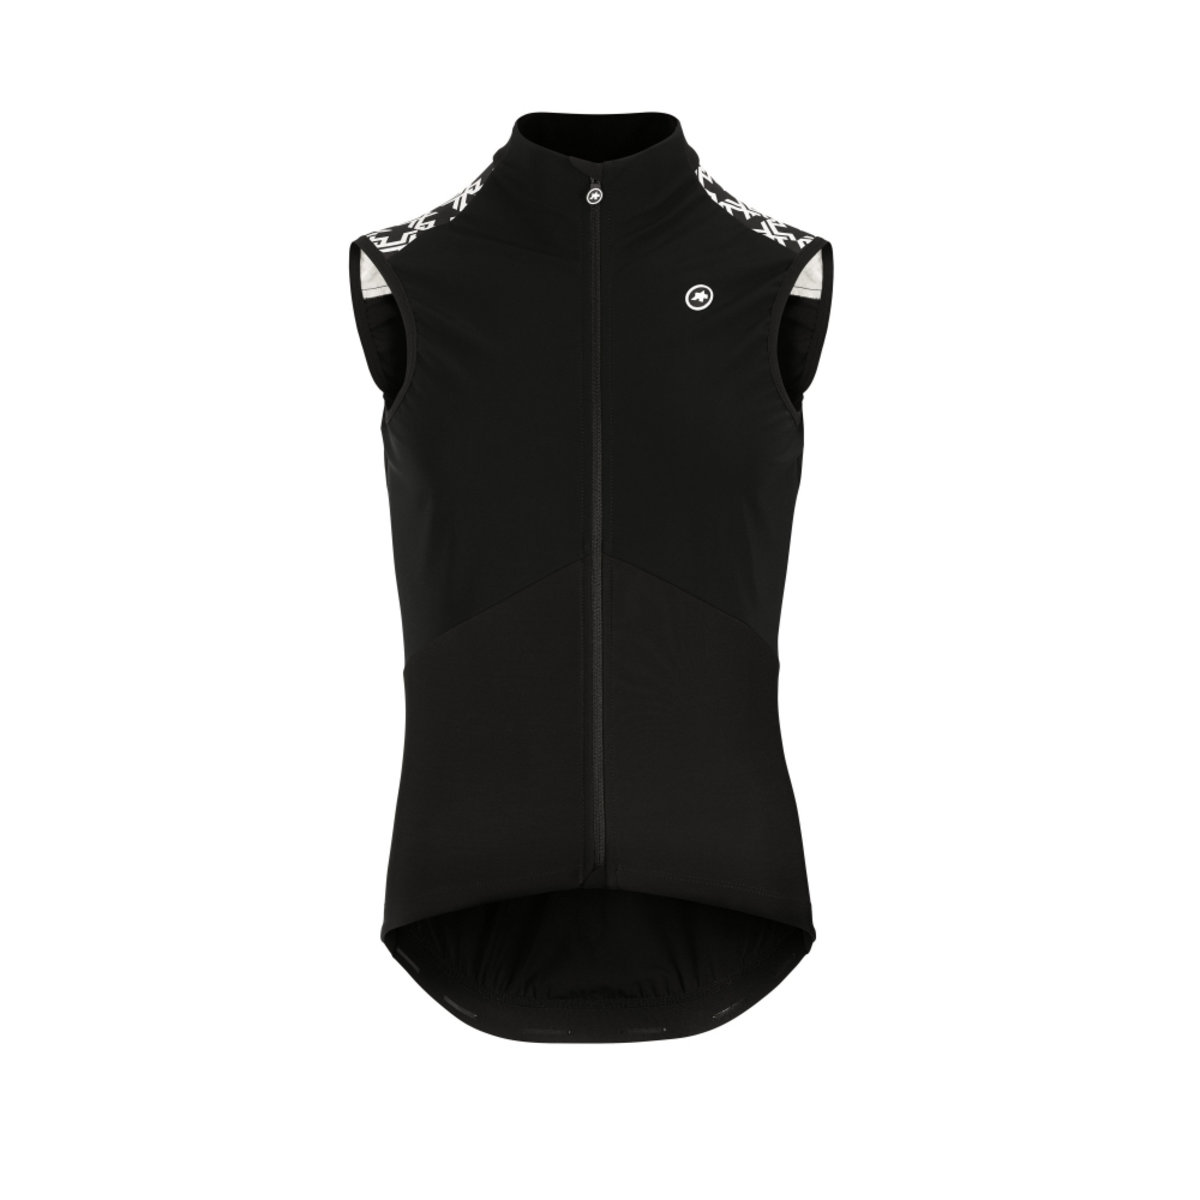 Жилетка ASSOS Mille GT Spring Fall Airblock Vest Black Series, мужская, черная с белым, TIR фото 